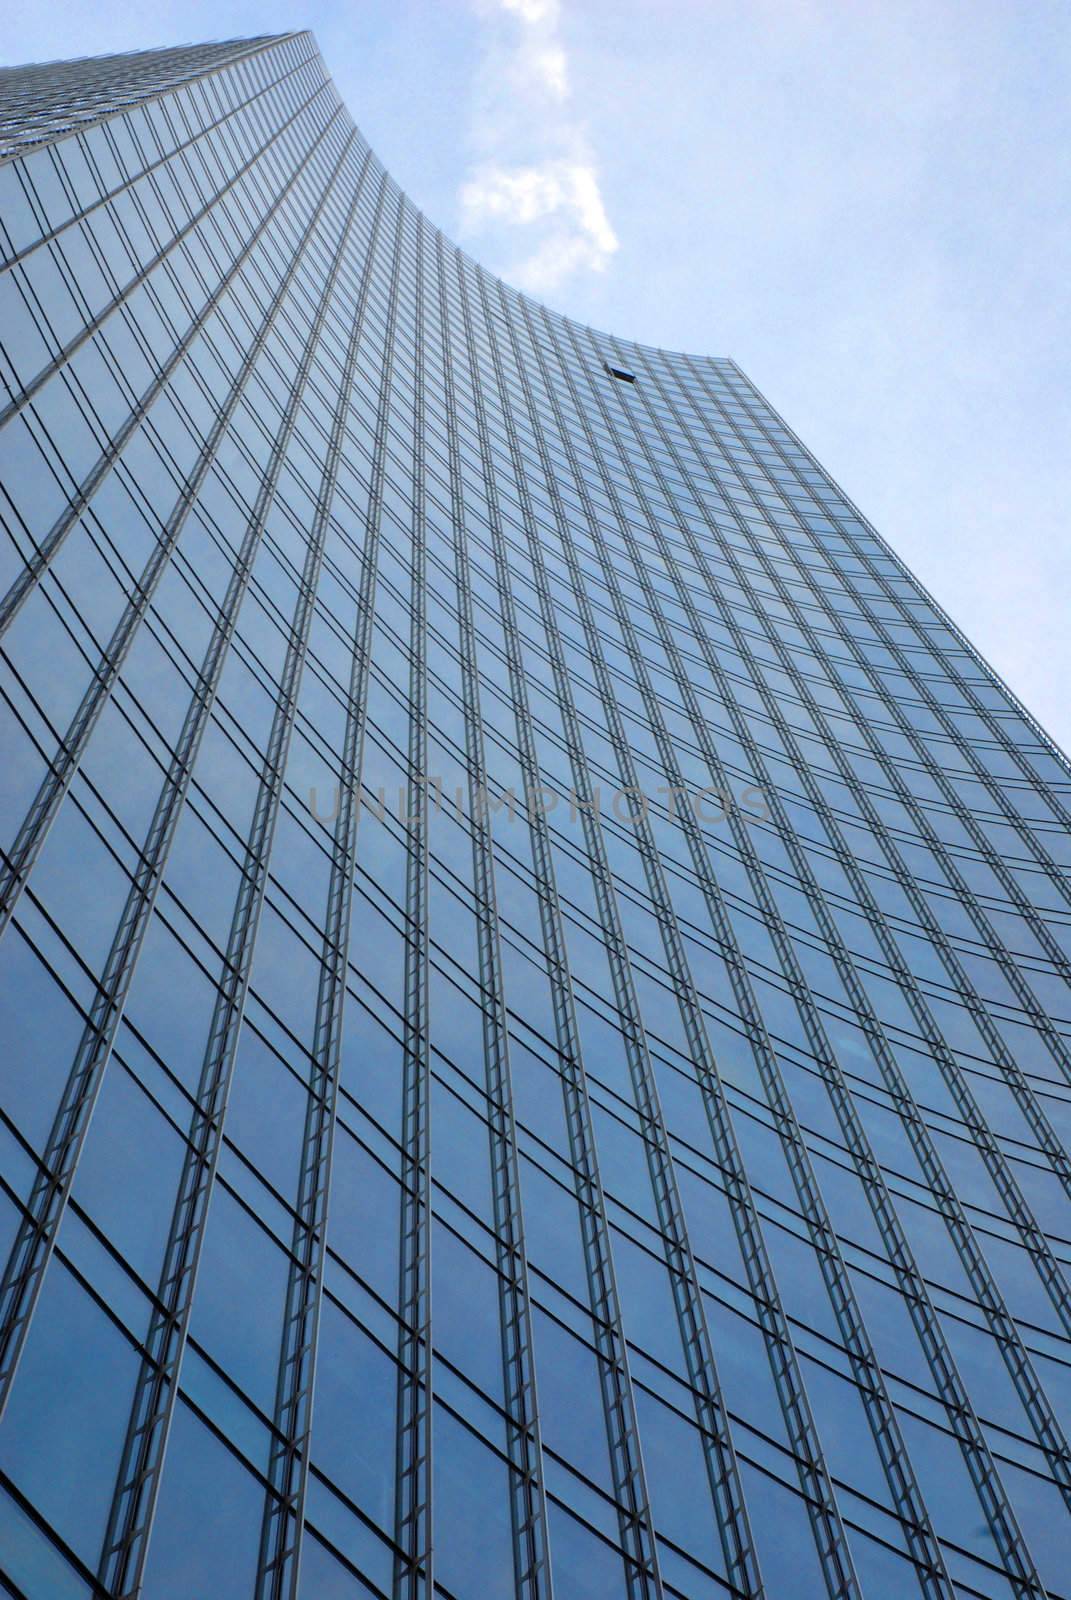 Mirrored skyscraper with an open window